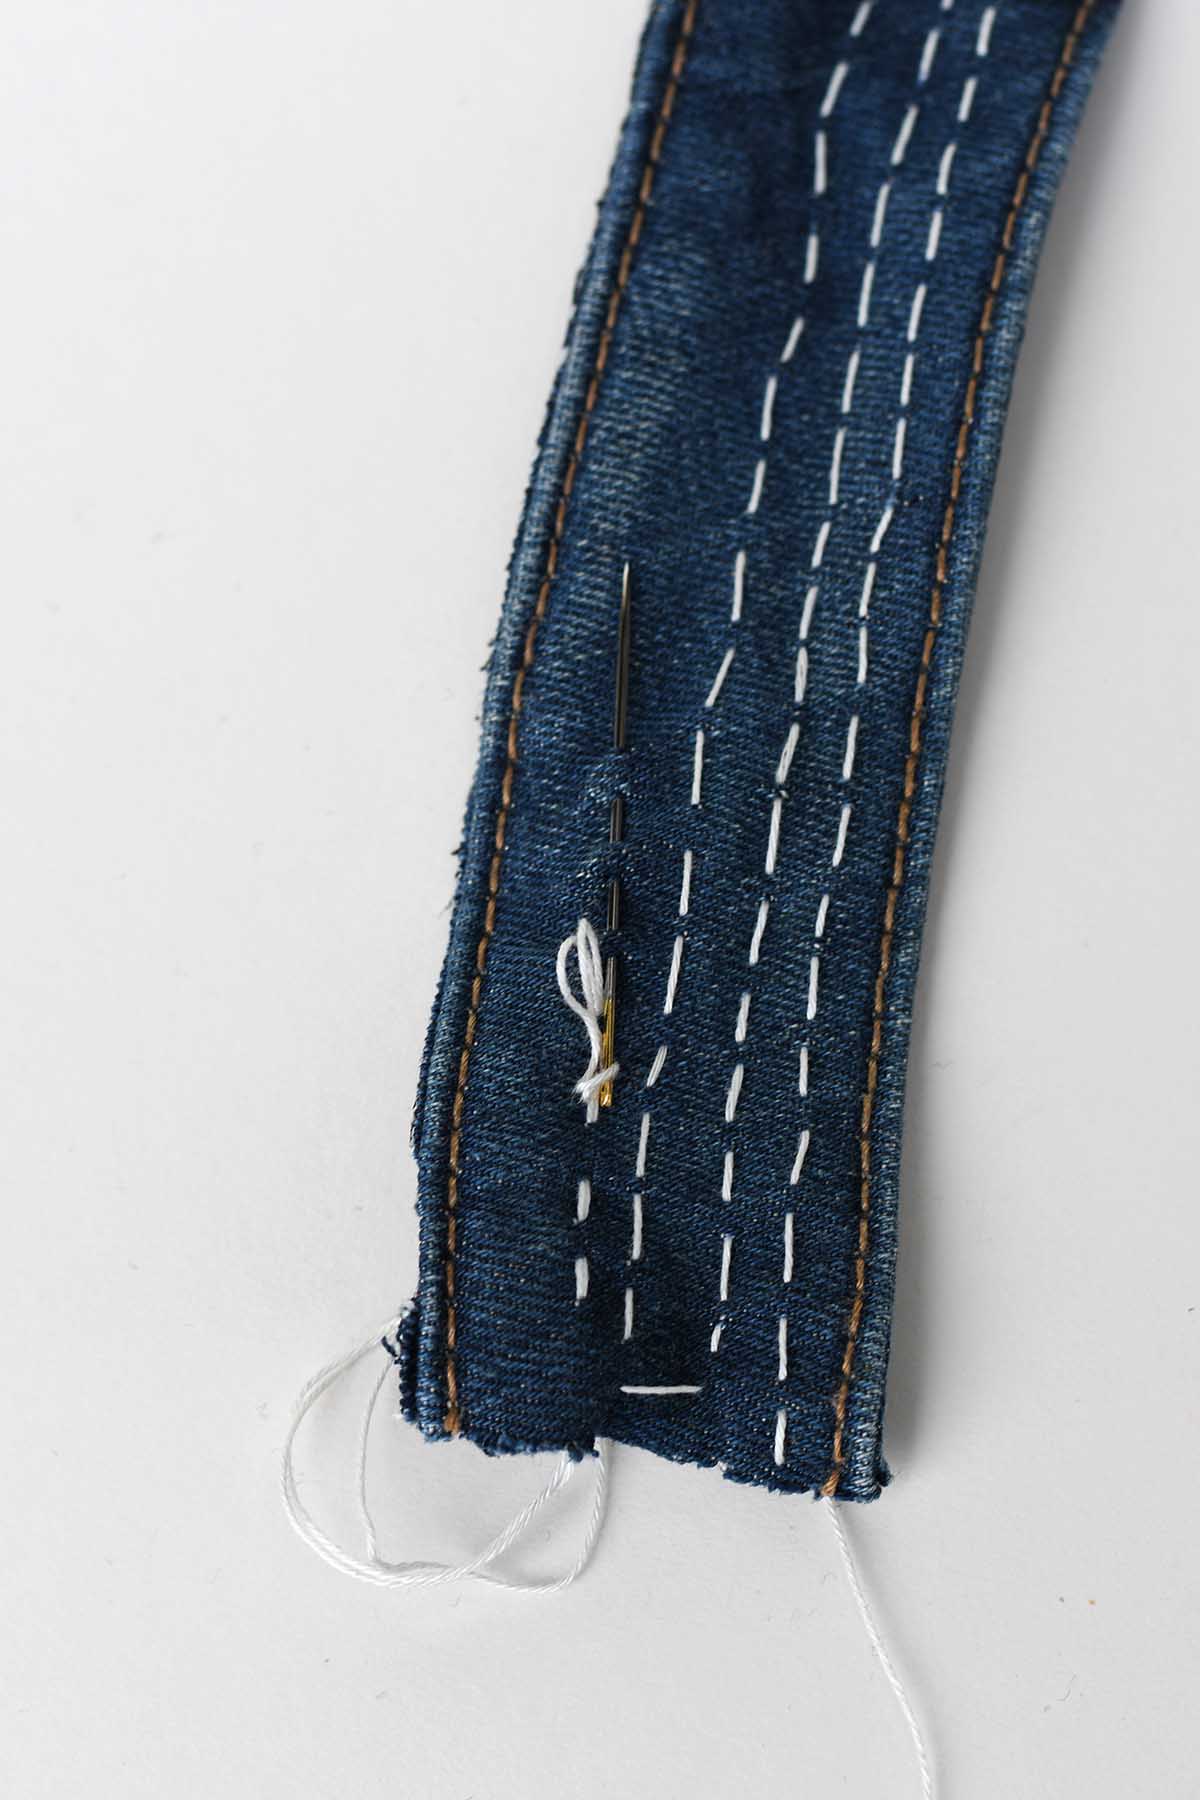 Sashiko stitching on a handmade bookmark from a denim waistband